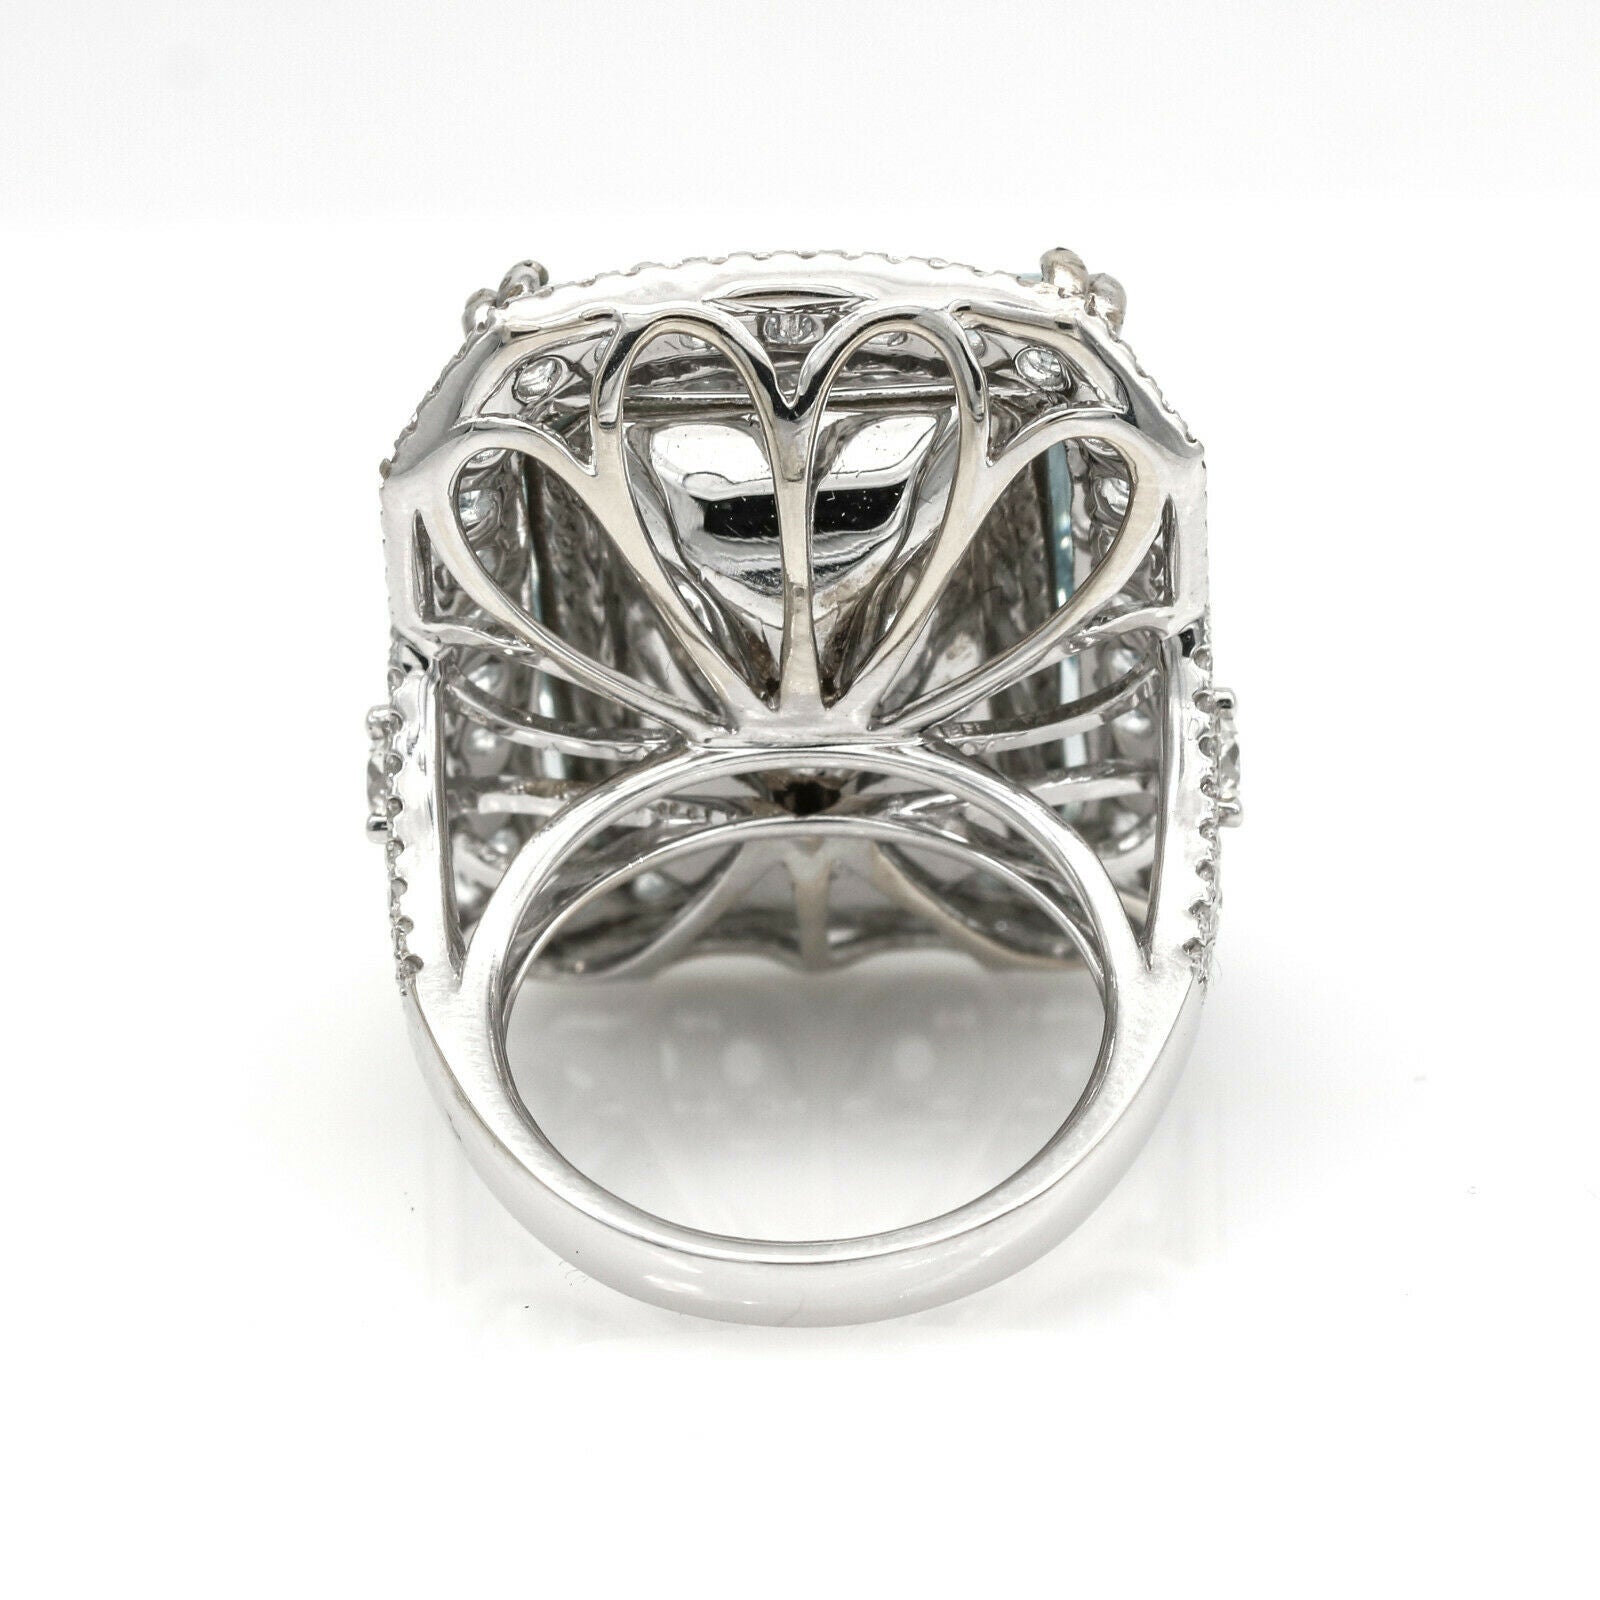 34.96 carat Aquamarine Diamond Statement Ring in 18k White Gold